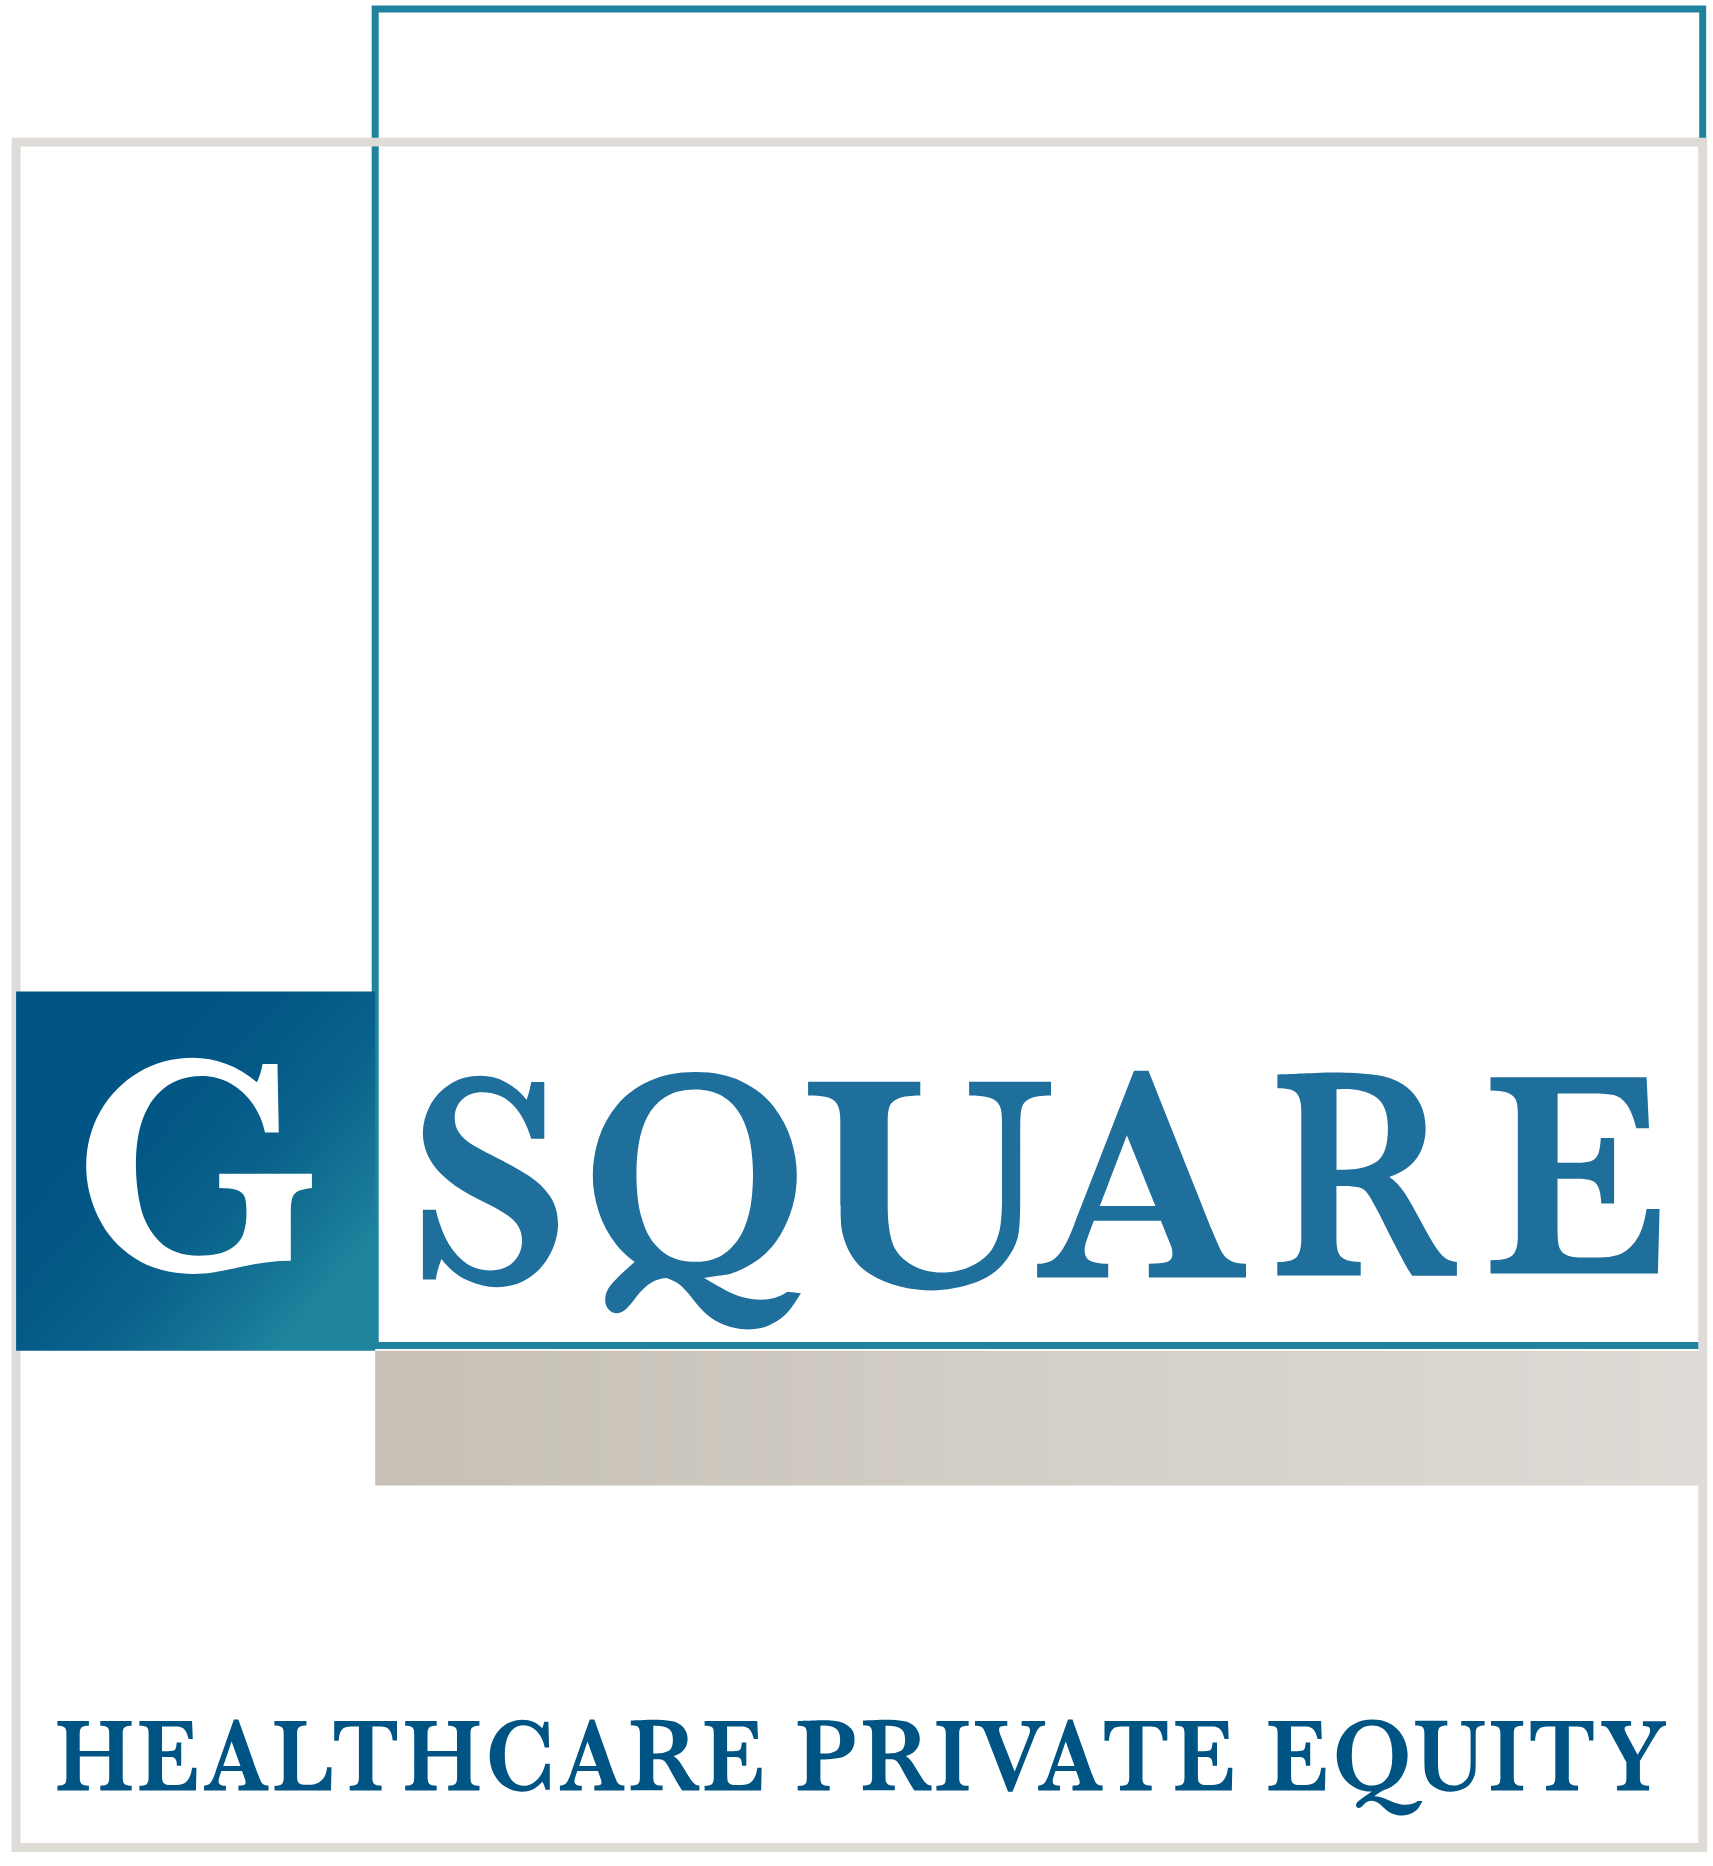 letter g inside the square | Logo Template by LogoDesign.net